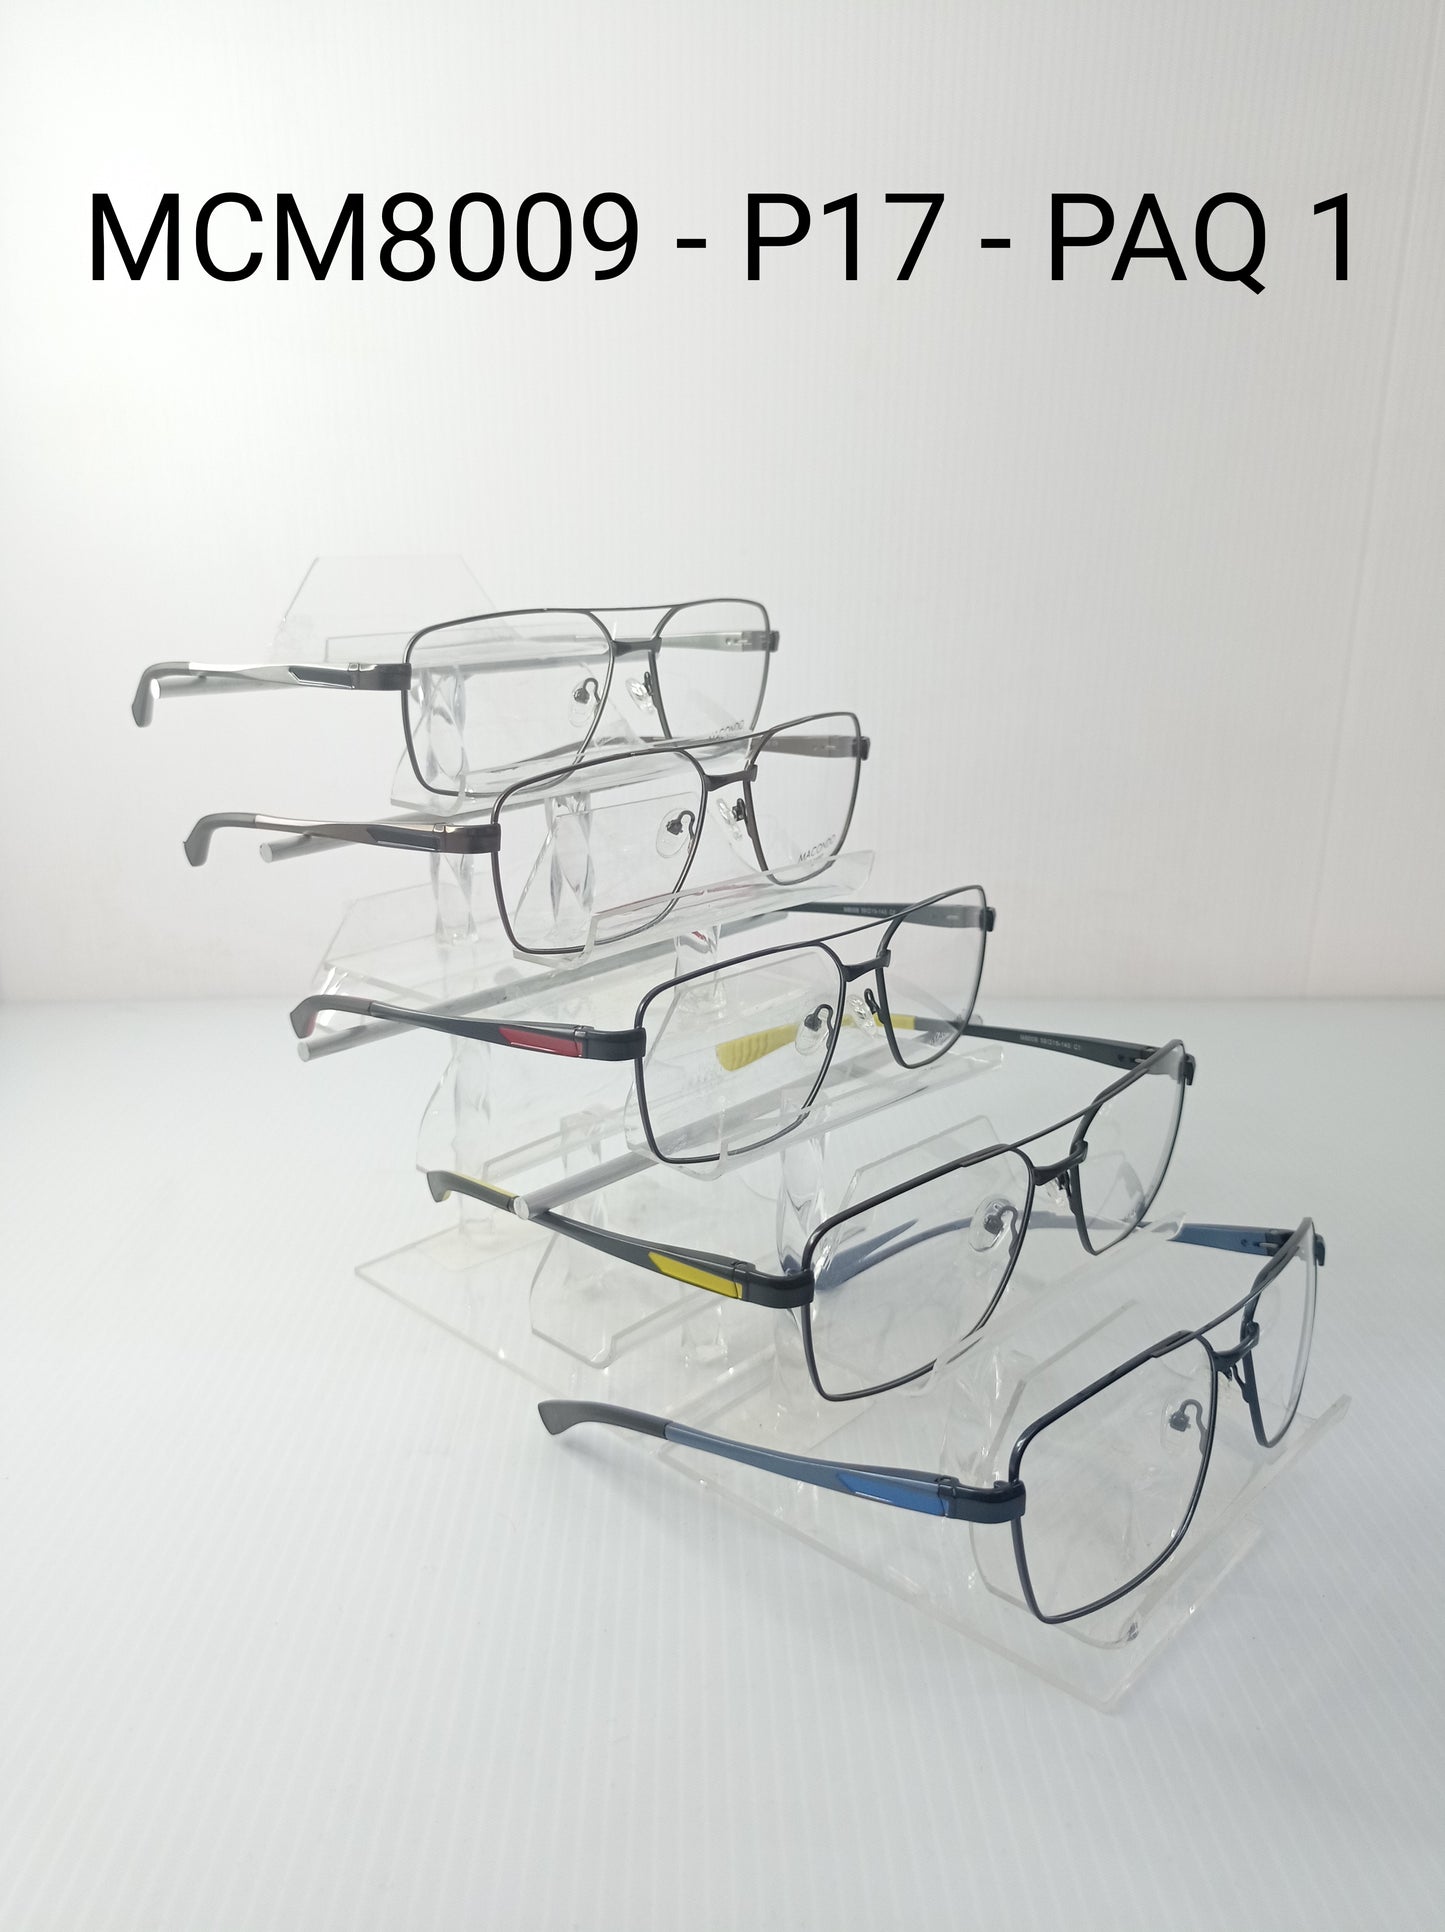 MACONDO - MCM8009 - P17